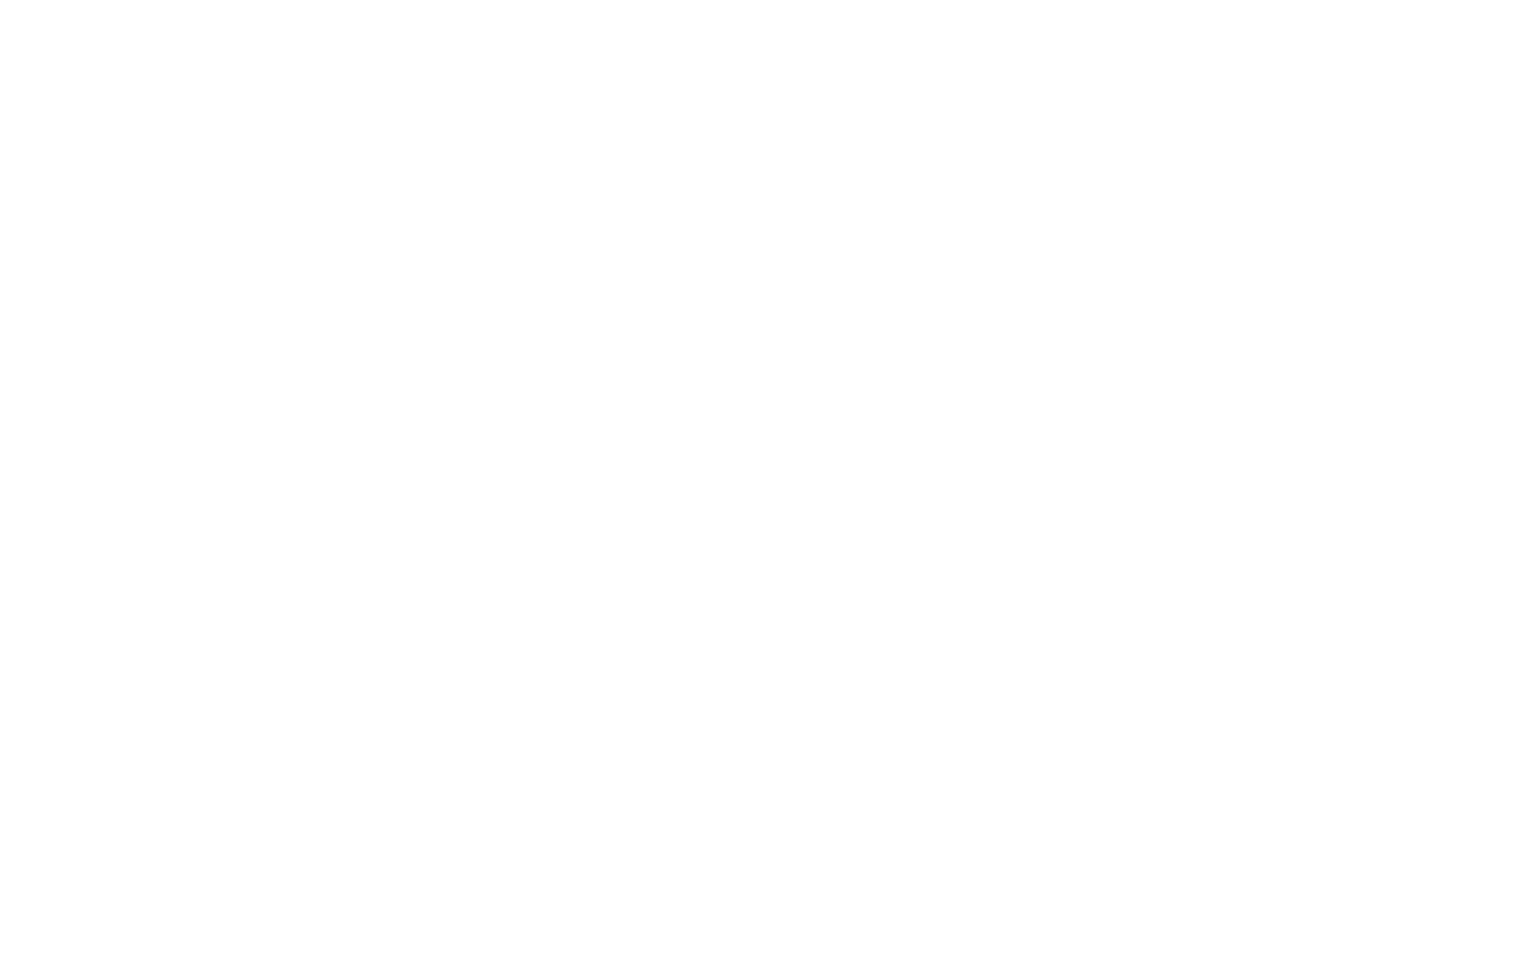 Peoples Bancorp logo large for dark backgrounds (transparent PNG)